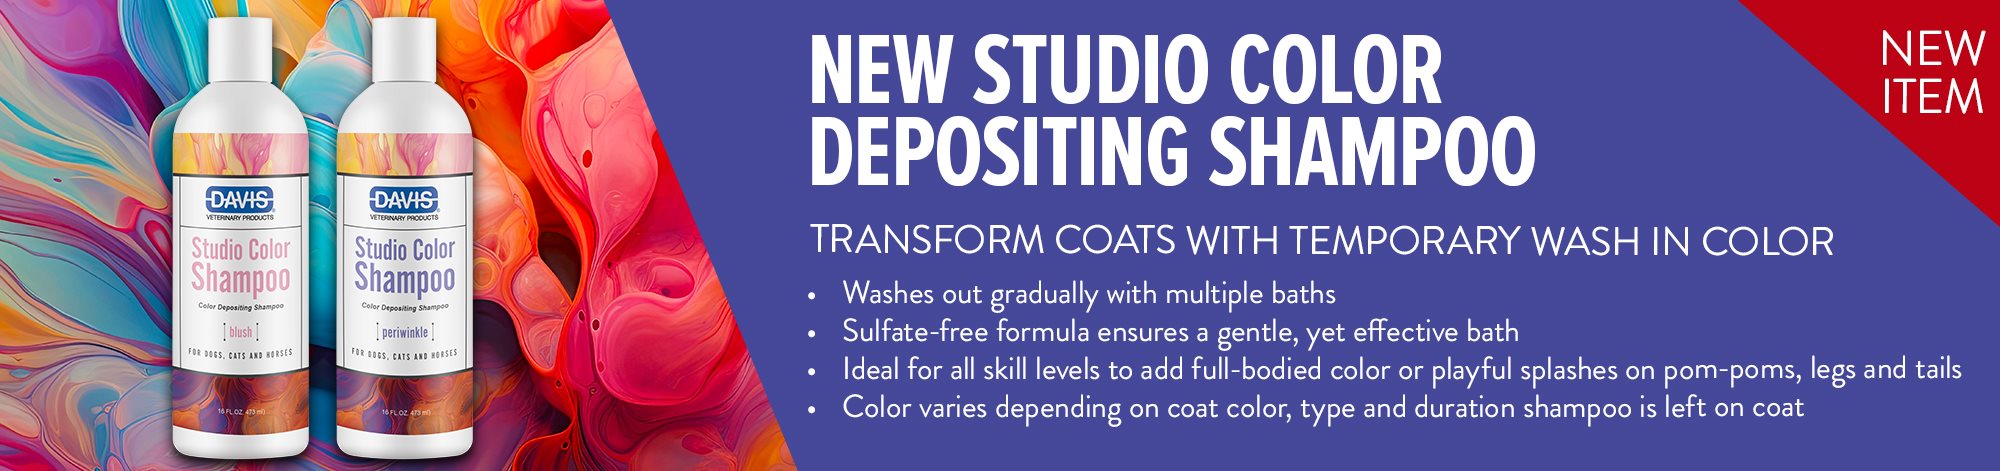 New Studio Color Depositing Shampoo